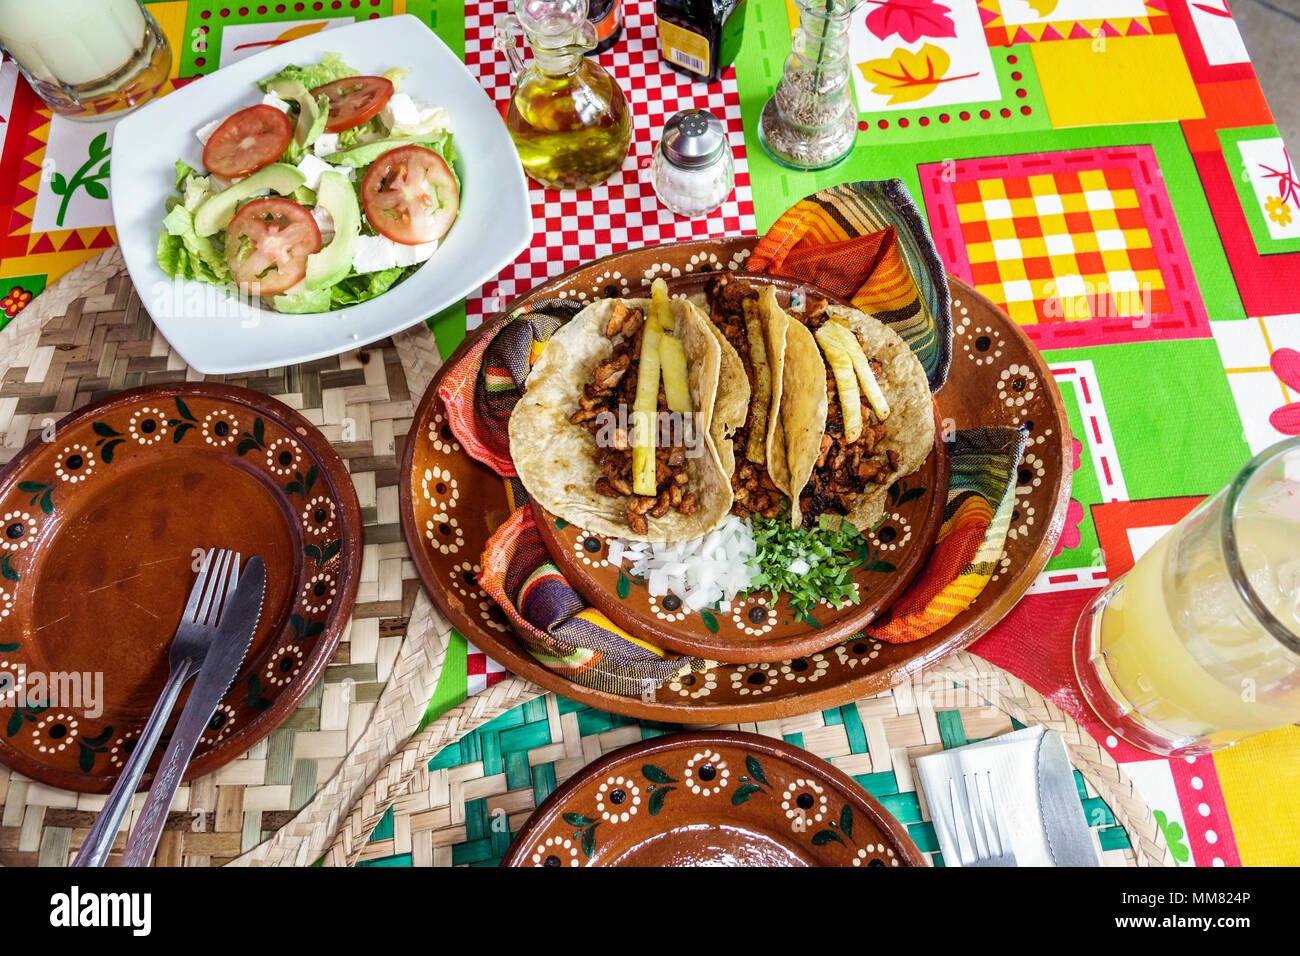 Mexico City,Polanco,Hispanic,immigrant immigrants,Mexican,Surtidora Don Batiz Terraza,restaurant restaurants food dining cafe cafes,inside,food plates Stock Photo